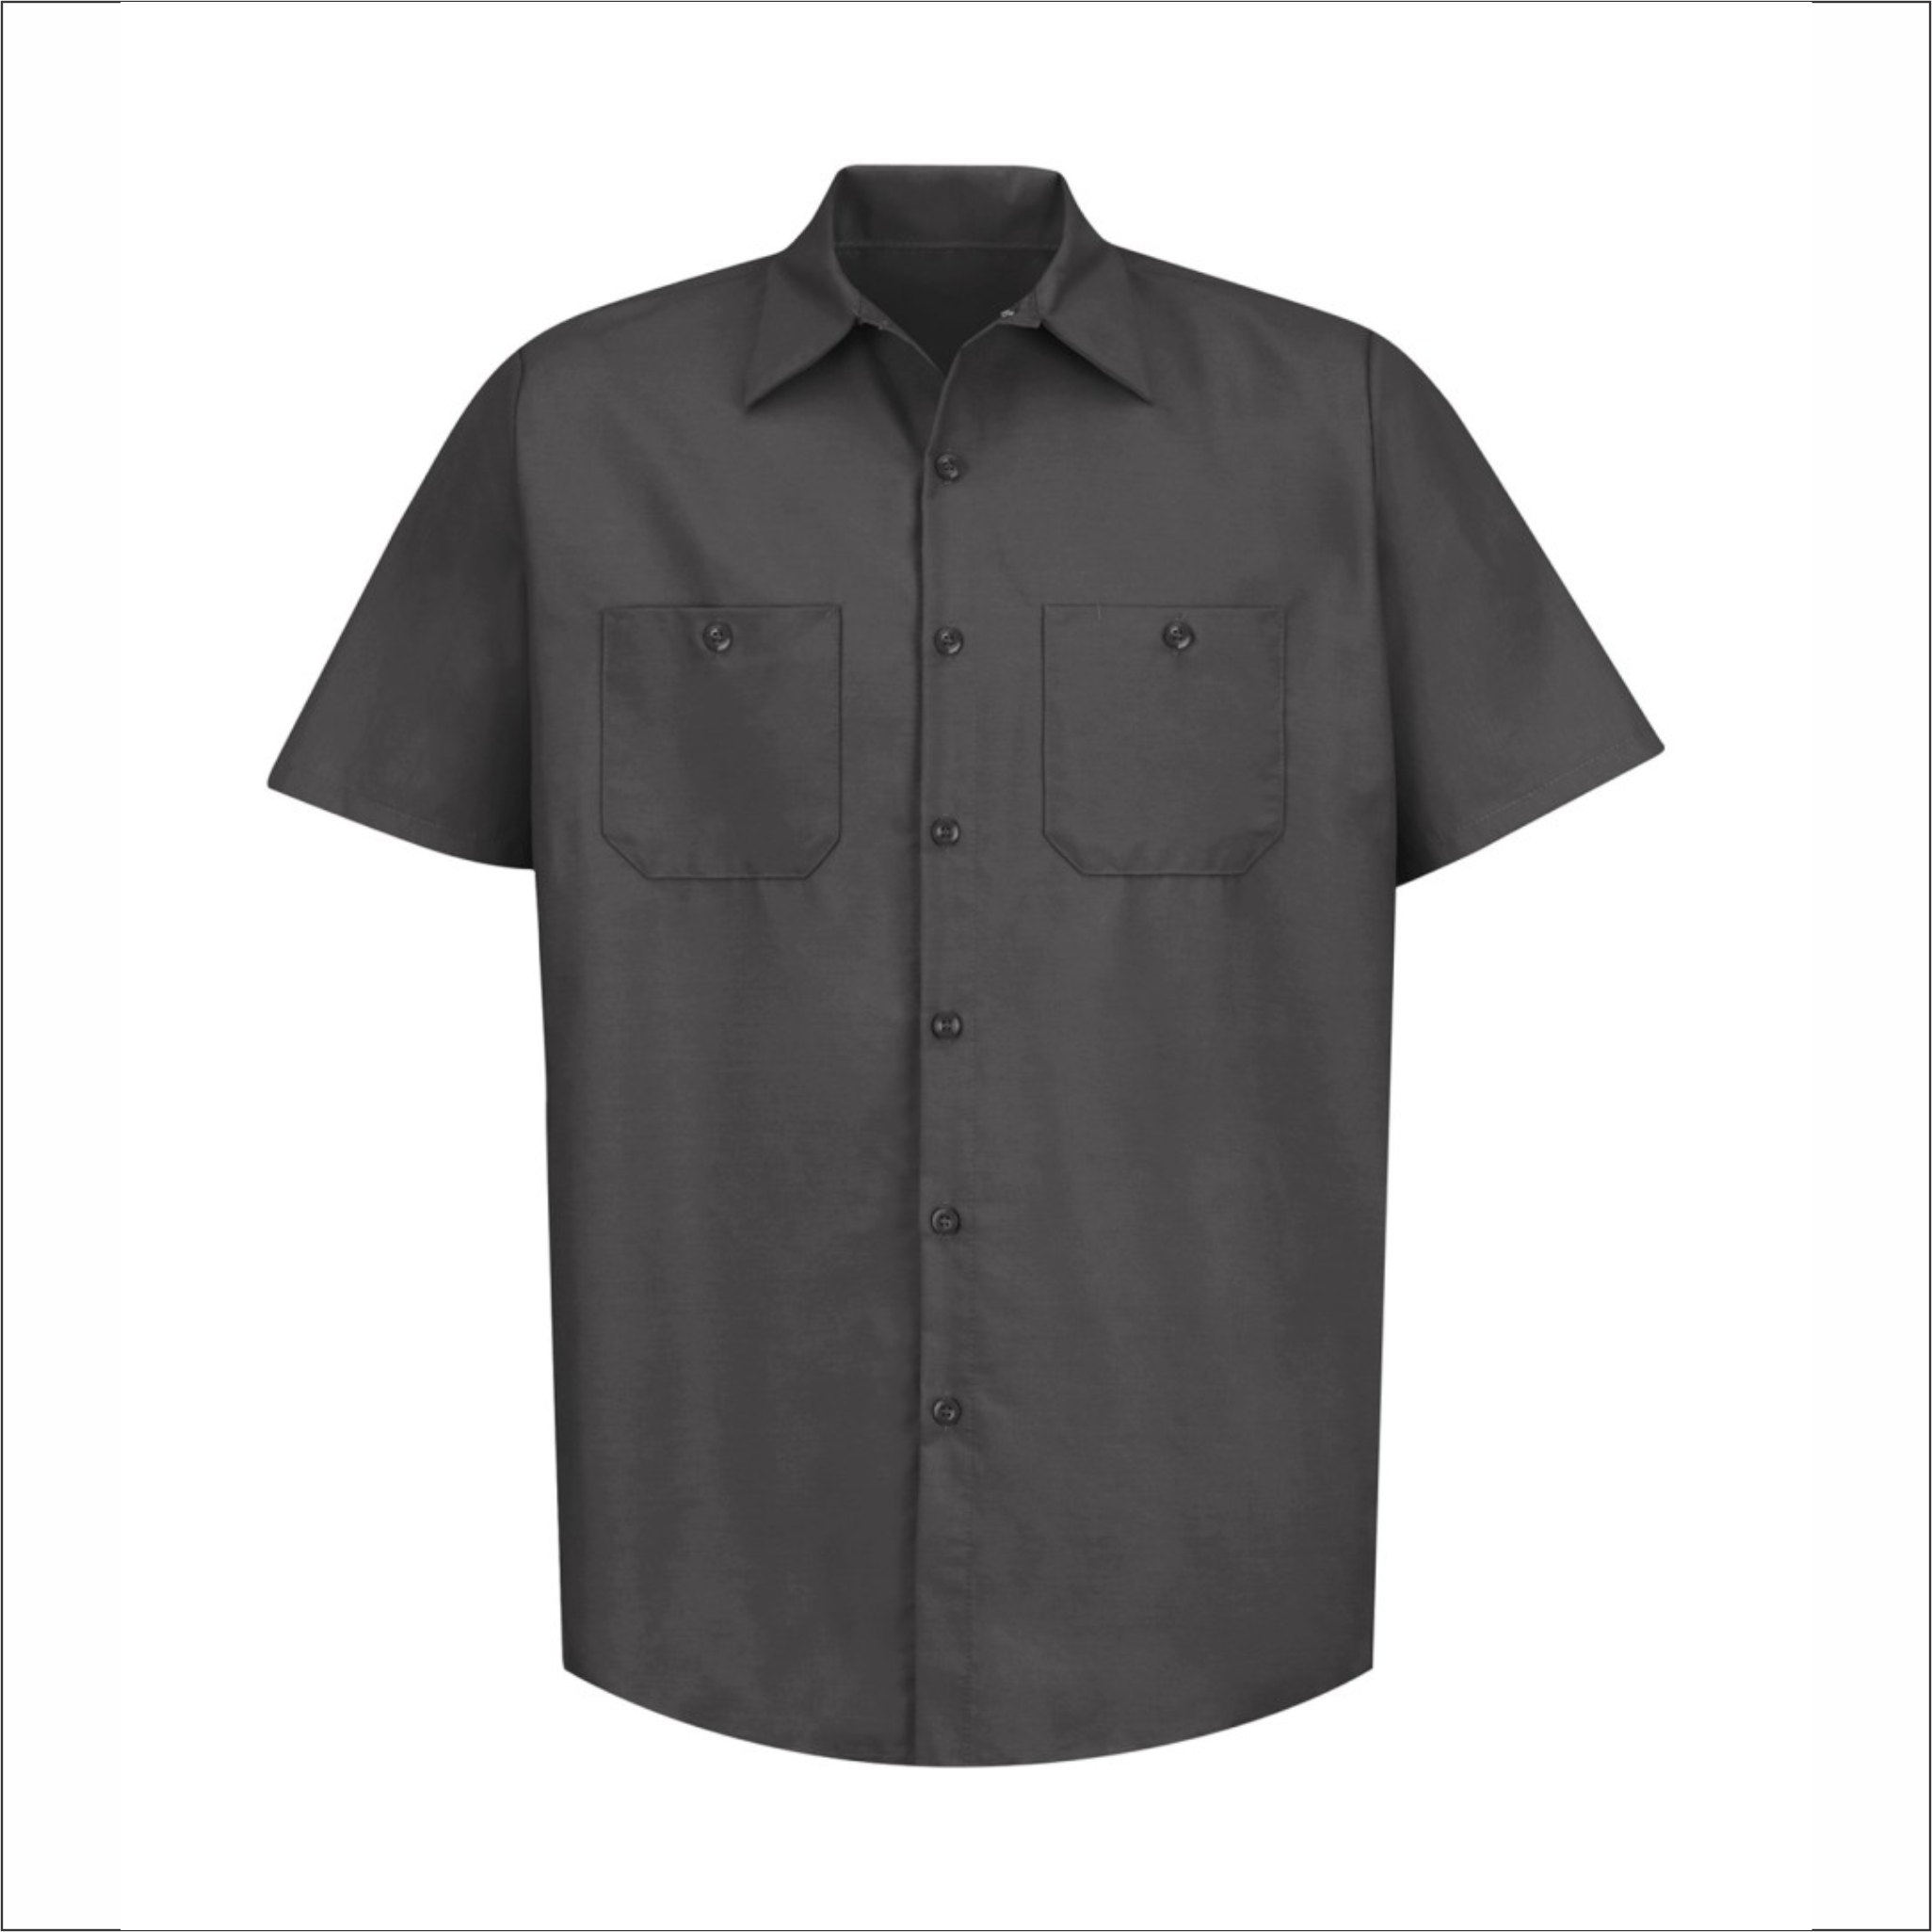 Charcoal Adult Dress Shirt - Short Sleeve - SP24